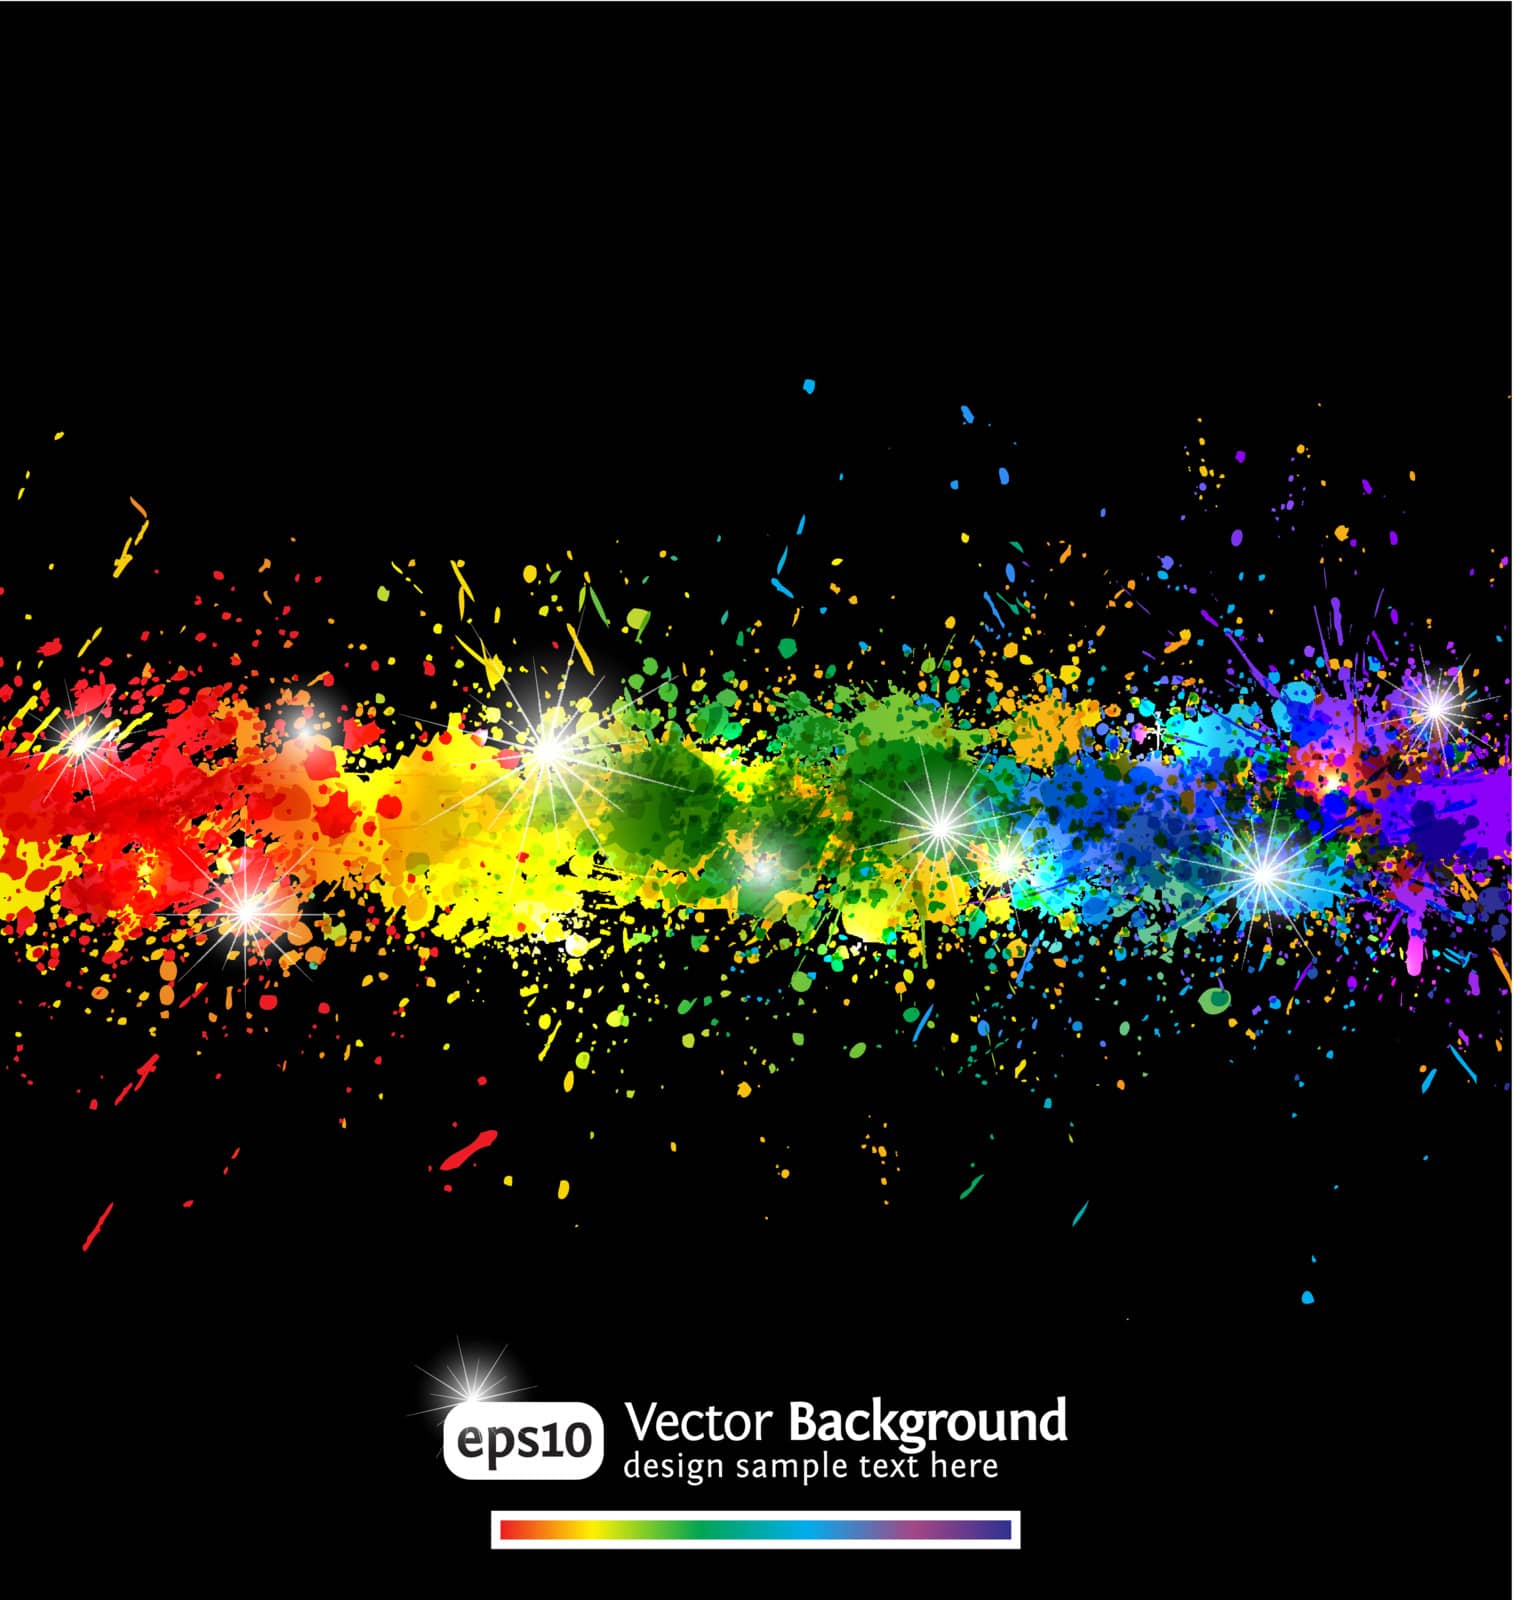 Colorful gradient paint splashes vector background. Eps10. Modern vector illustration.